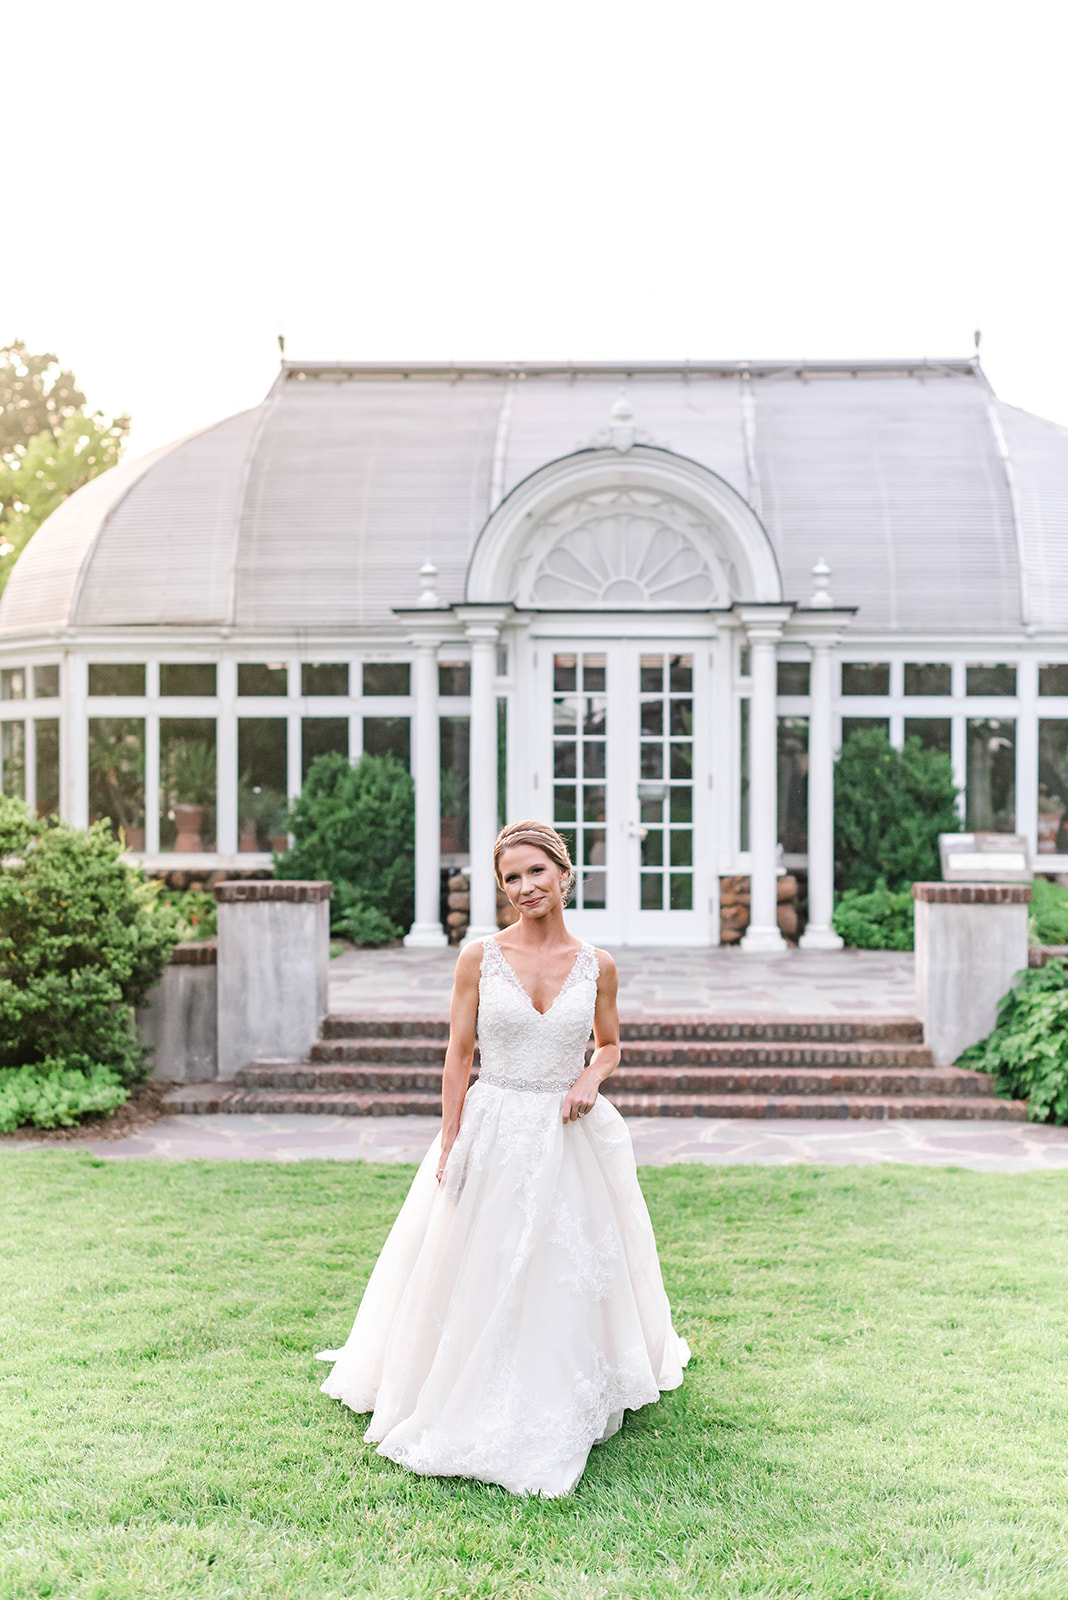 A light-filled evening bridal session at Reynolda Gardens in Winston-Salem, NC. 